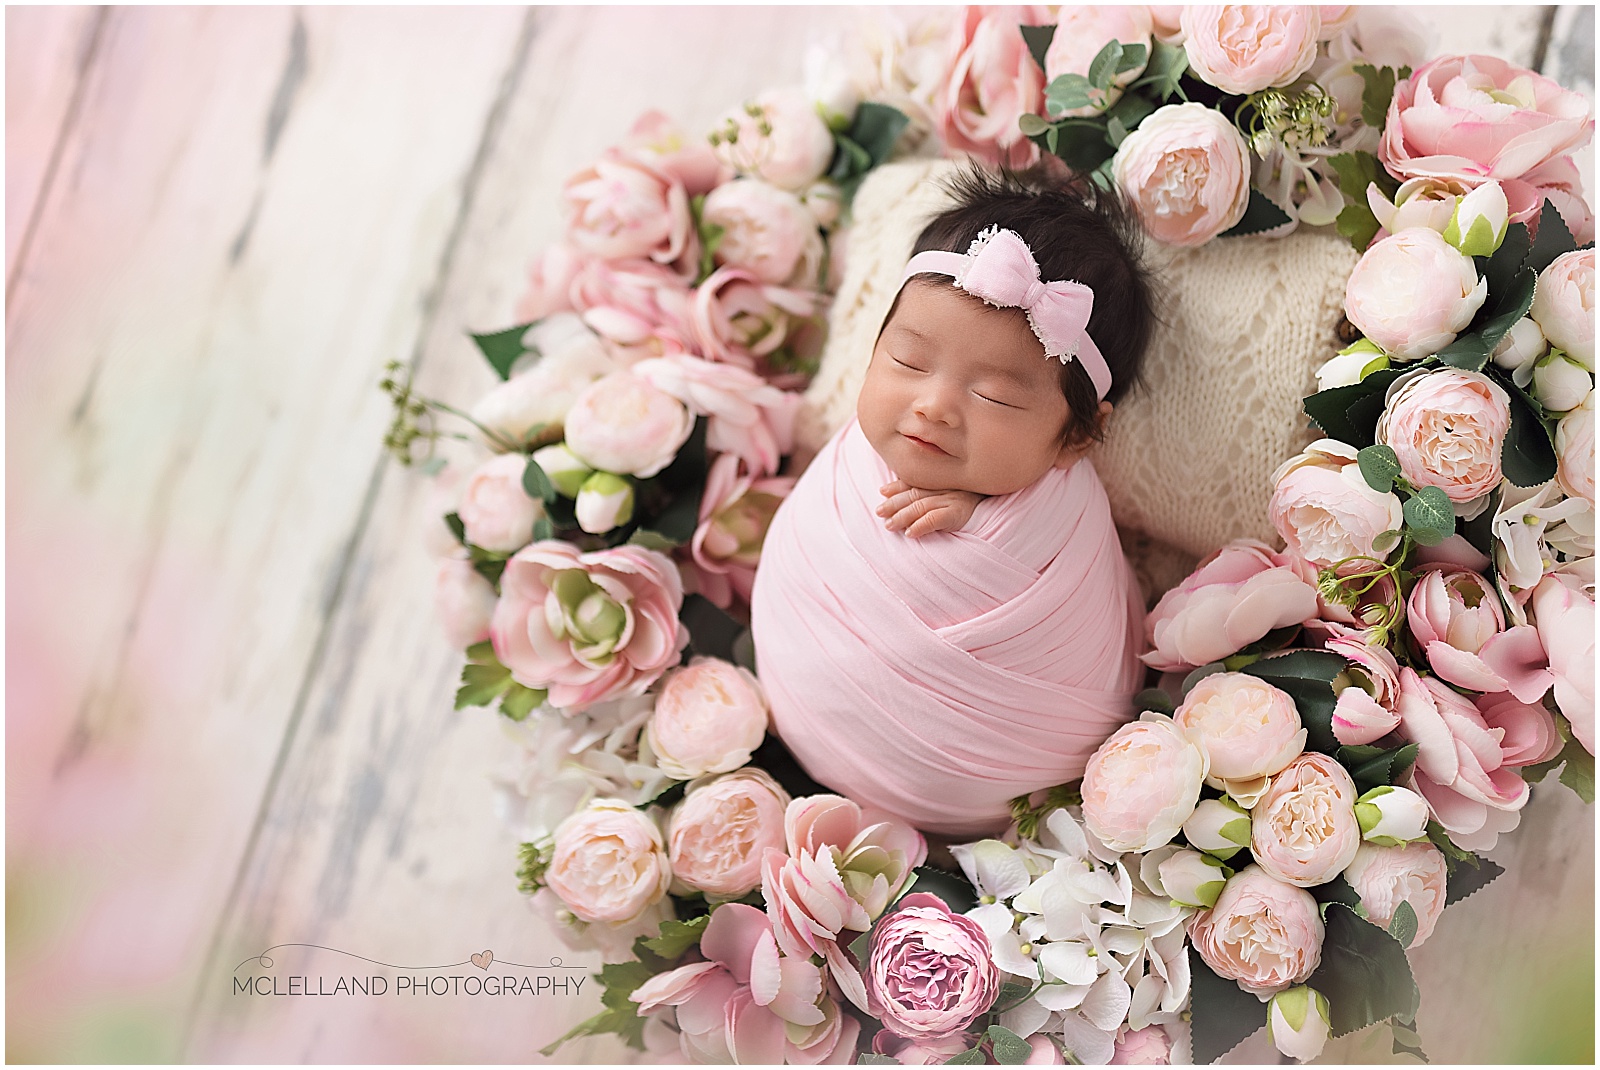 Baby girl sleeping in a wreath of flowers